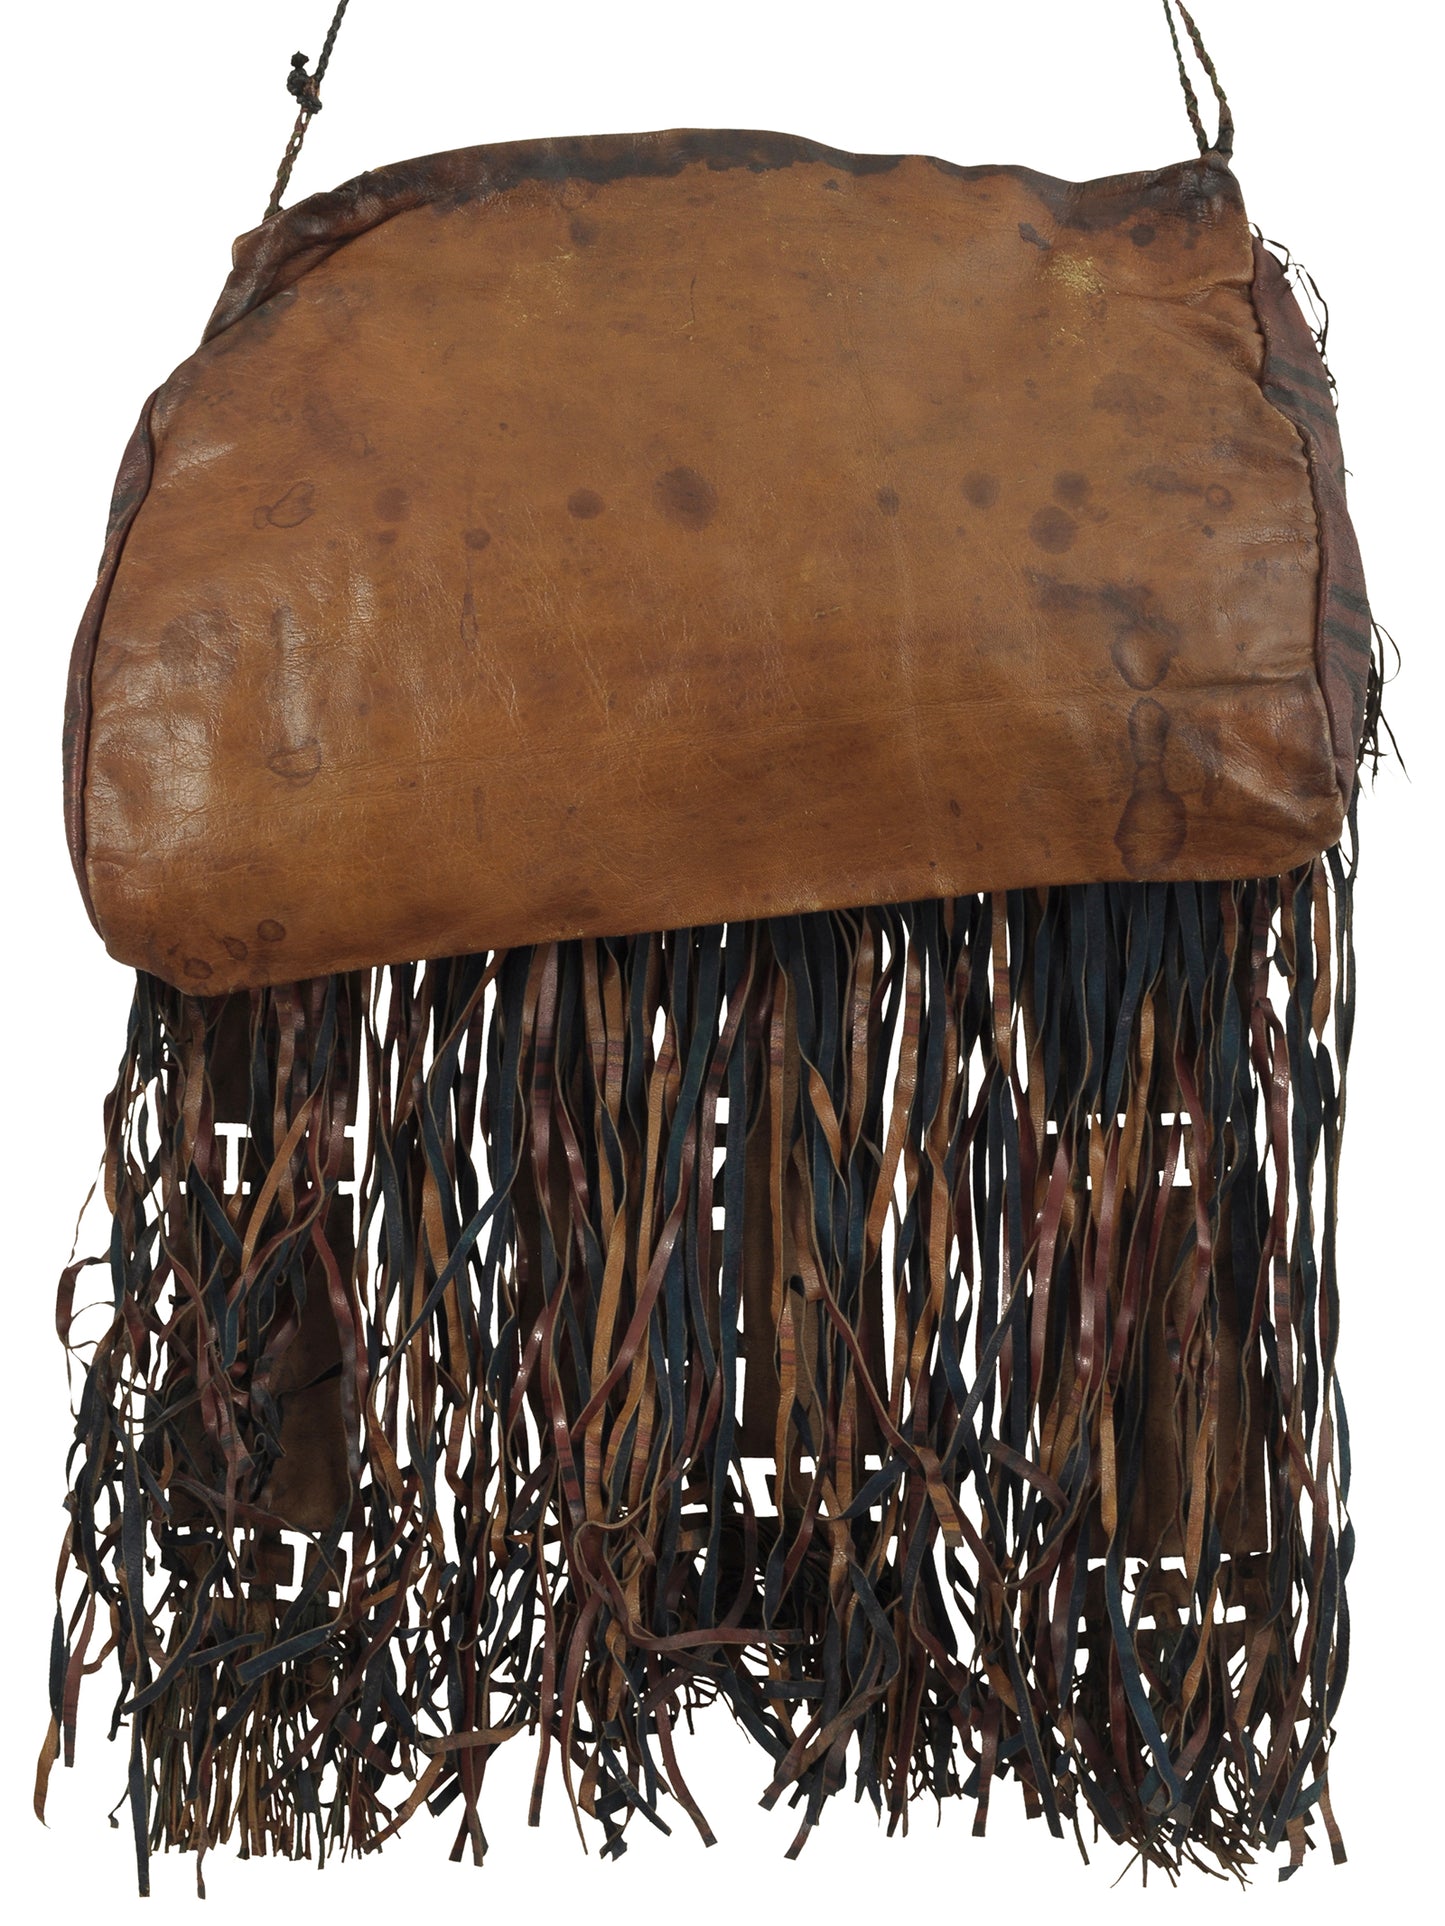 Tuareg leather camel bag Niger Peul Fula African Sahara desert